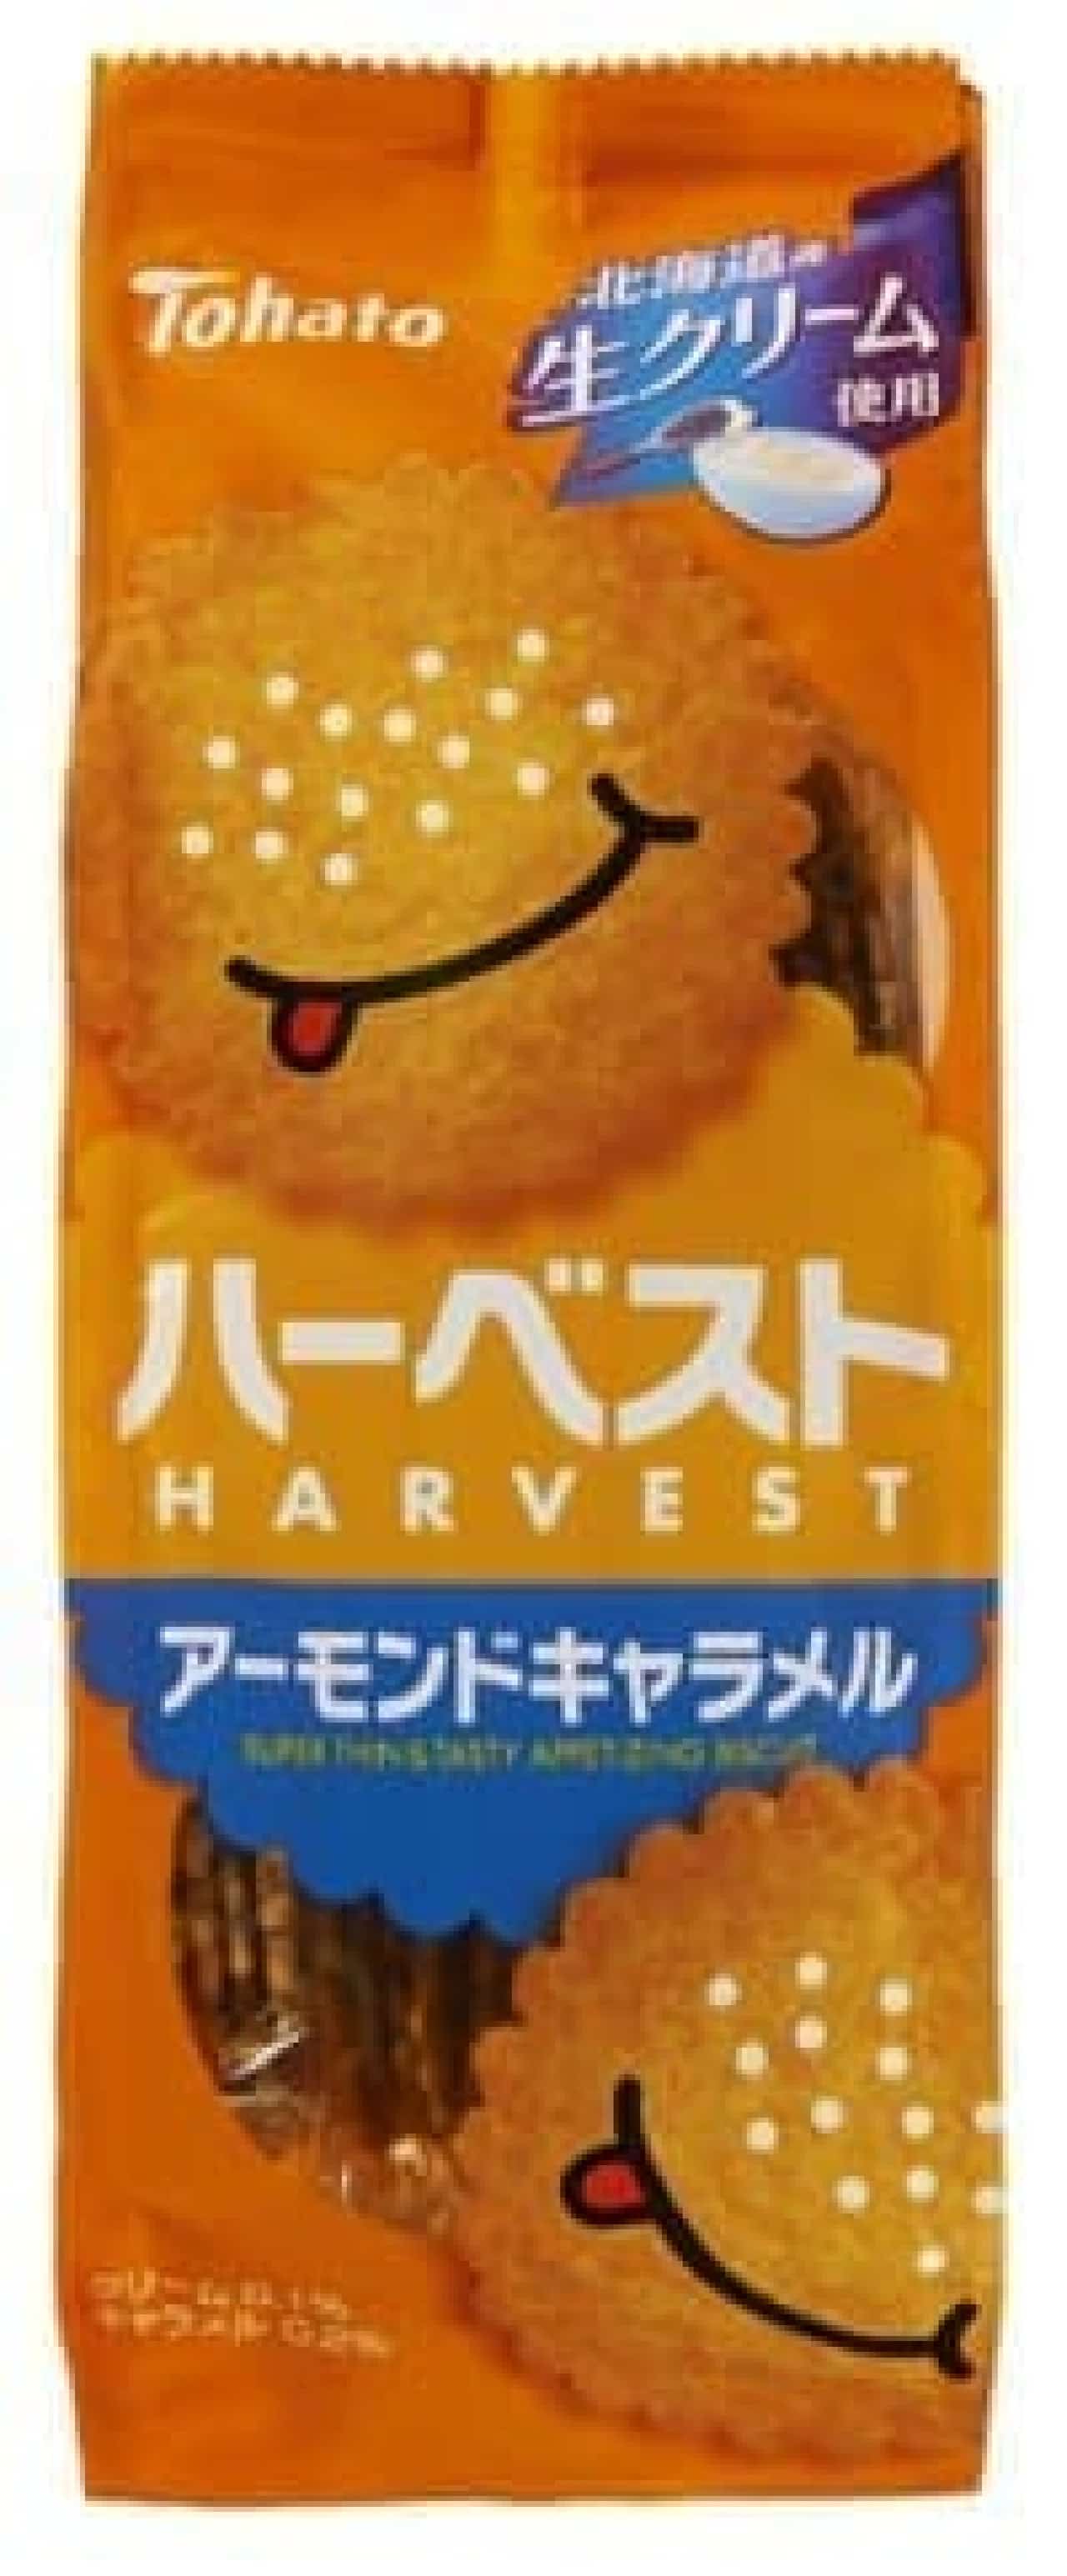 Tohato "Harvest Almond Caramel"